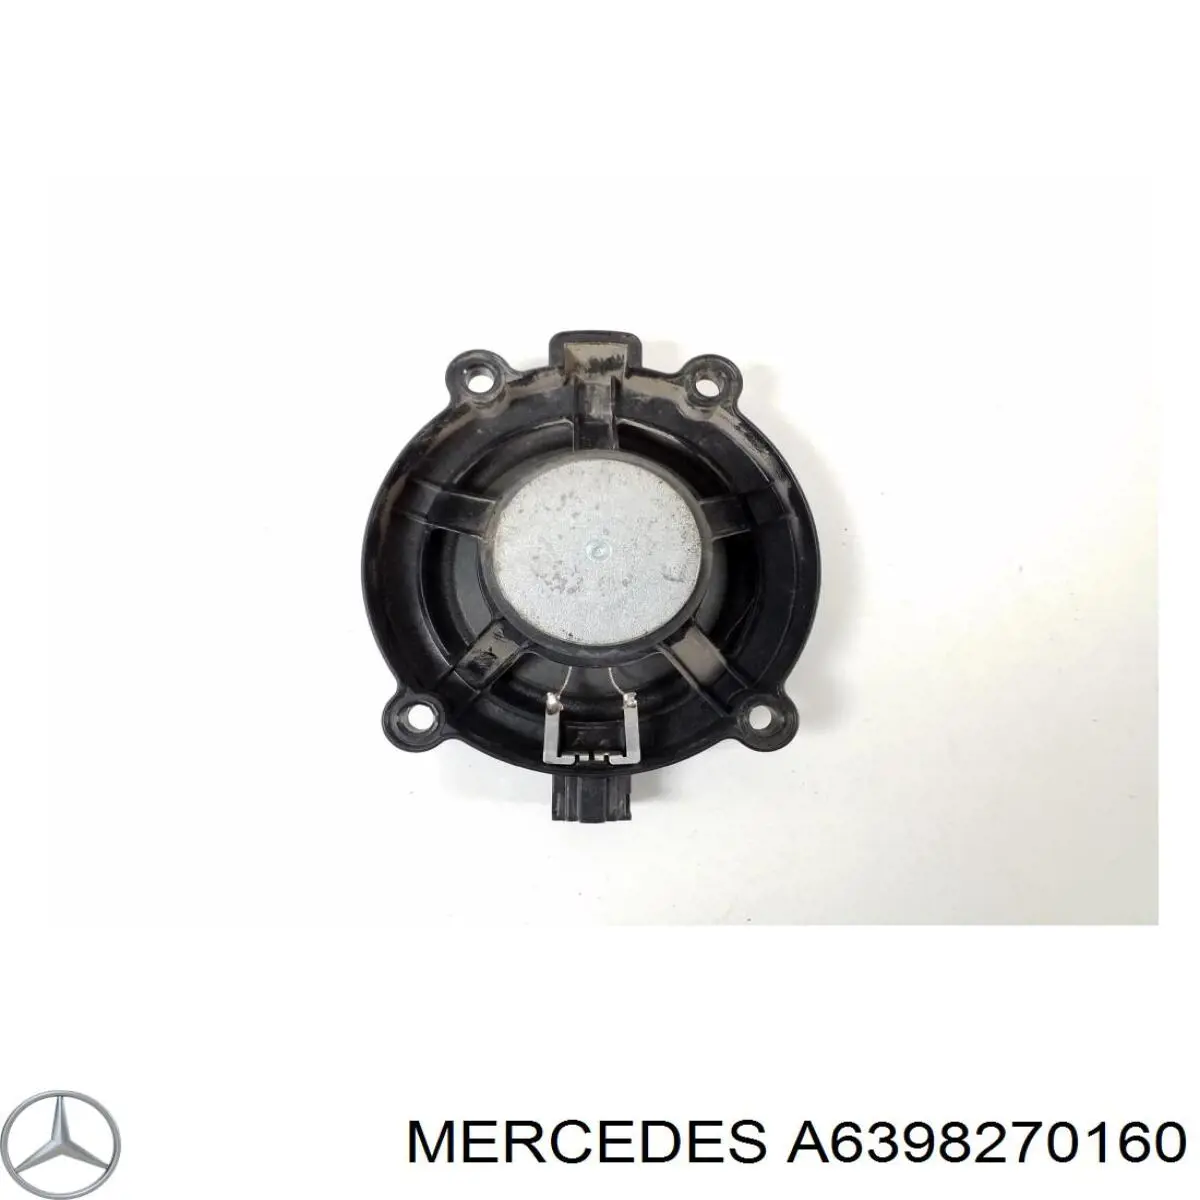 6398270160 Mercedes